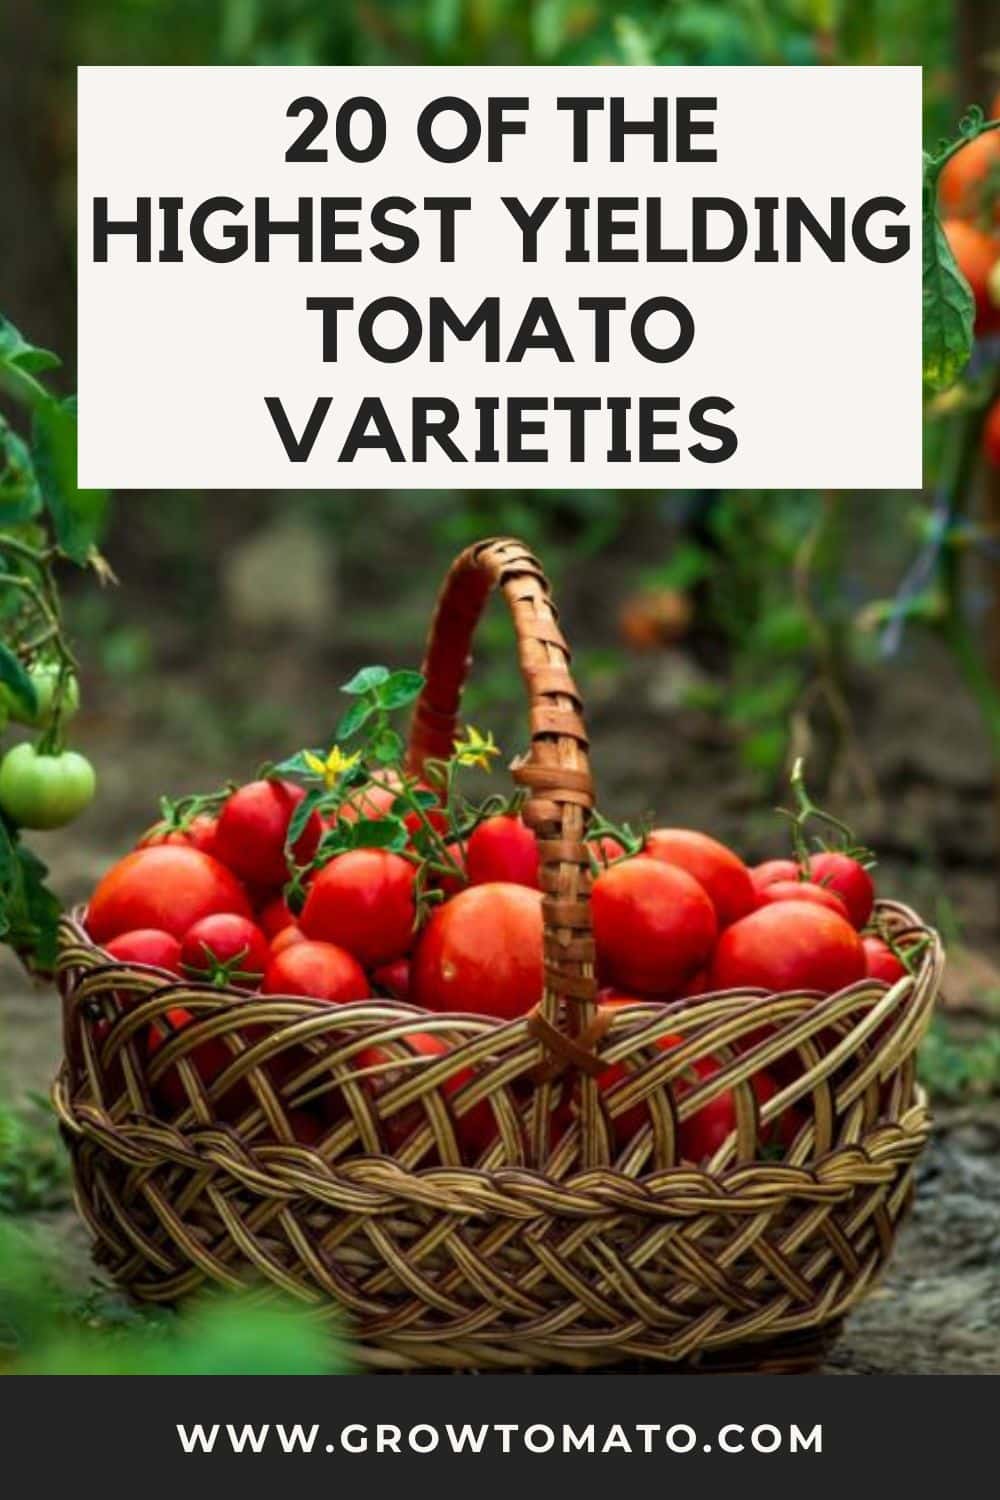 20 Of The Highest Yielding Tomato Varieties pinterest image.